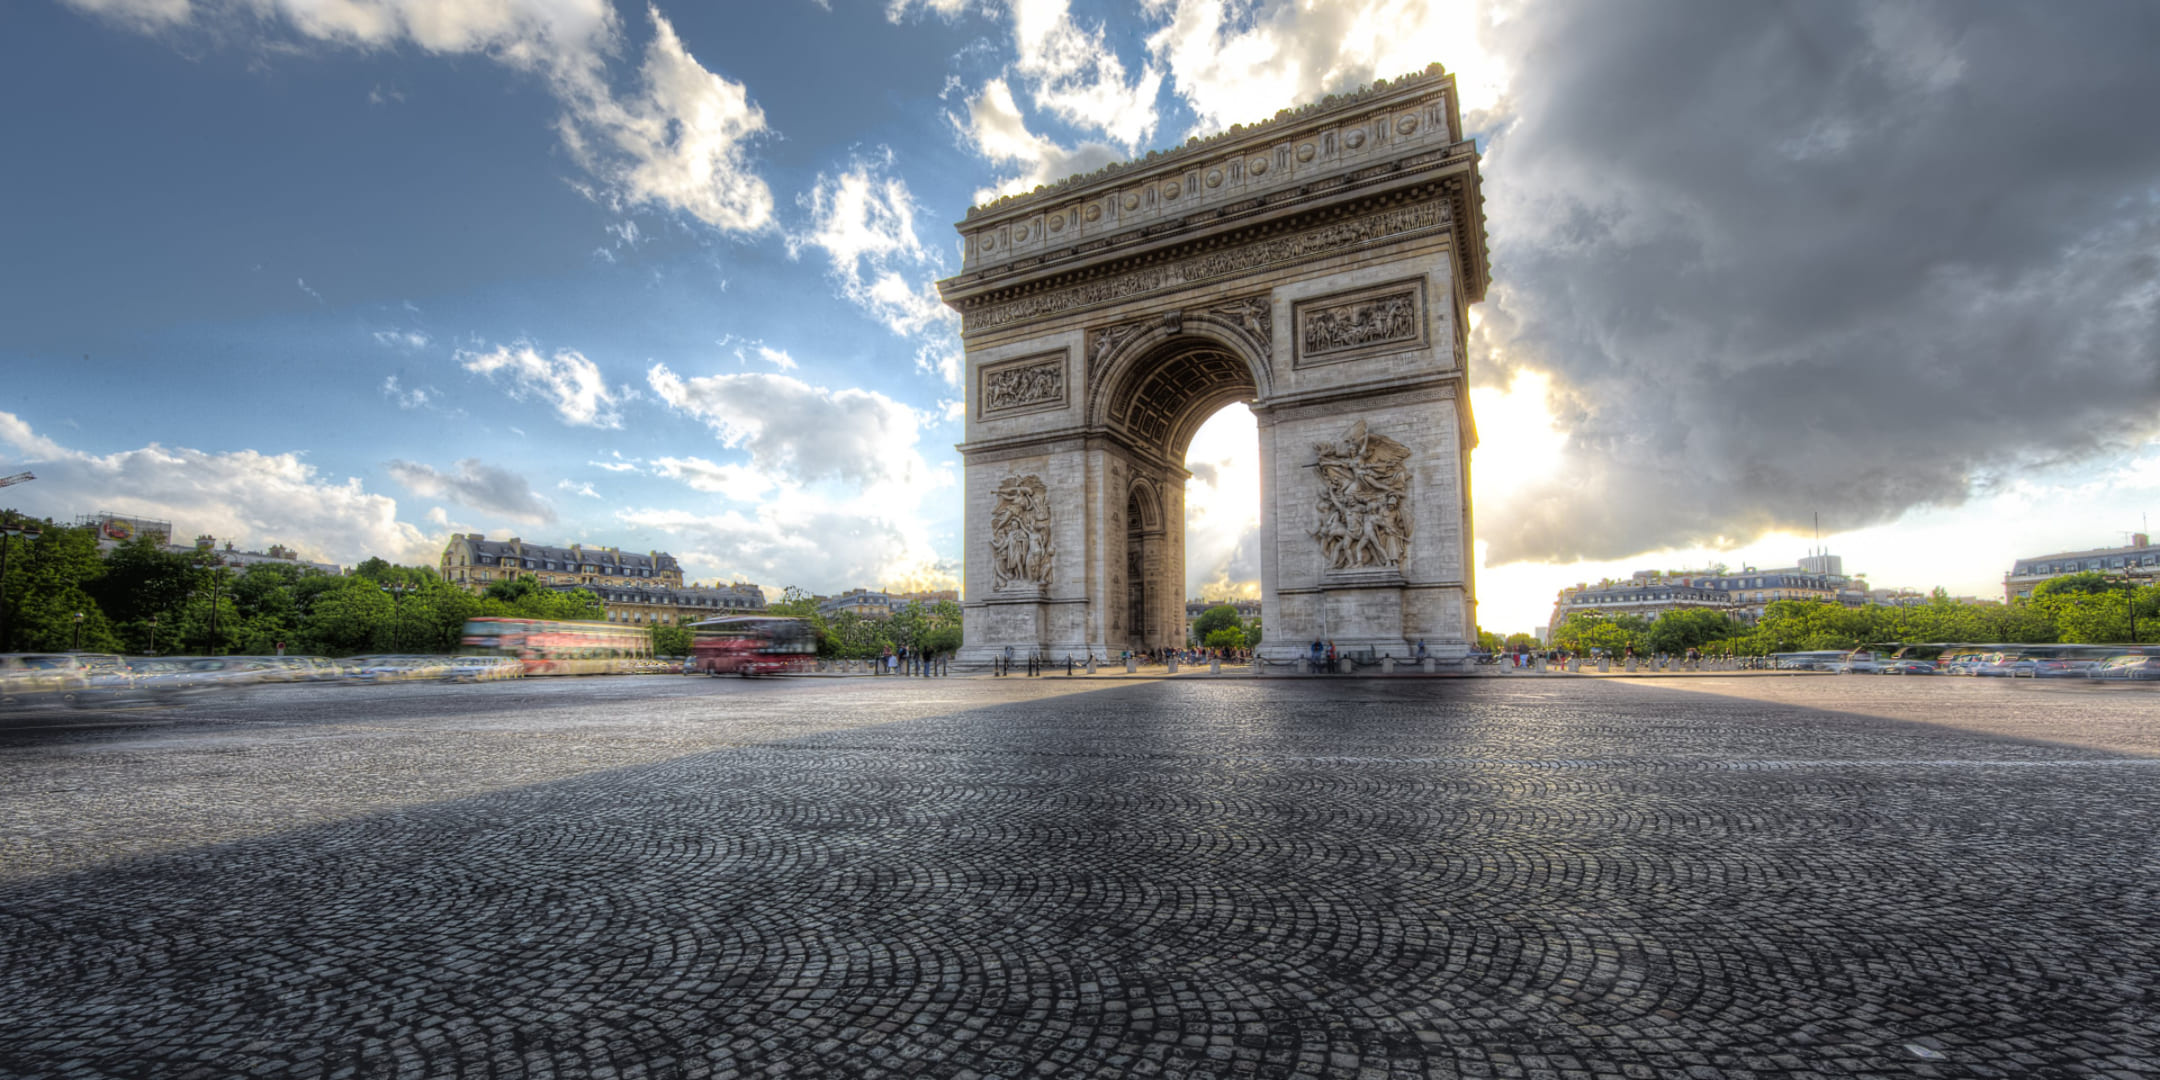 Arc de Triomphe, High-quality wallpapers, Stunning visuals, Impressive structure, 2160x1080 Dual Screen Desktop